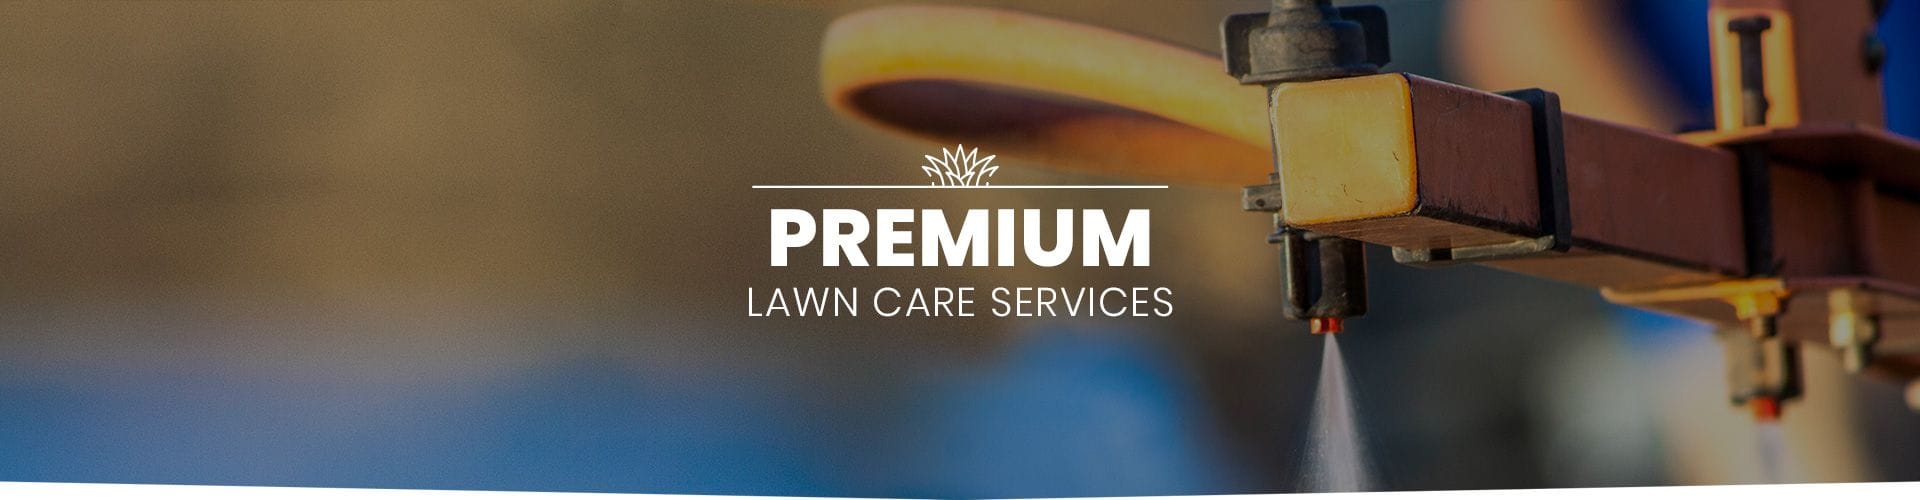 Premium Lawn Care Services Geelong & Bellarine Peninsula